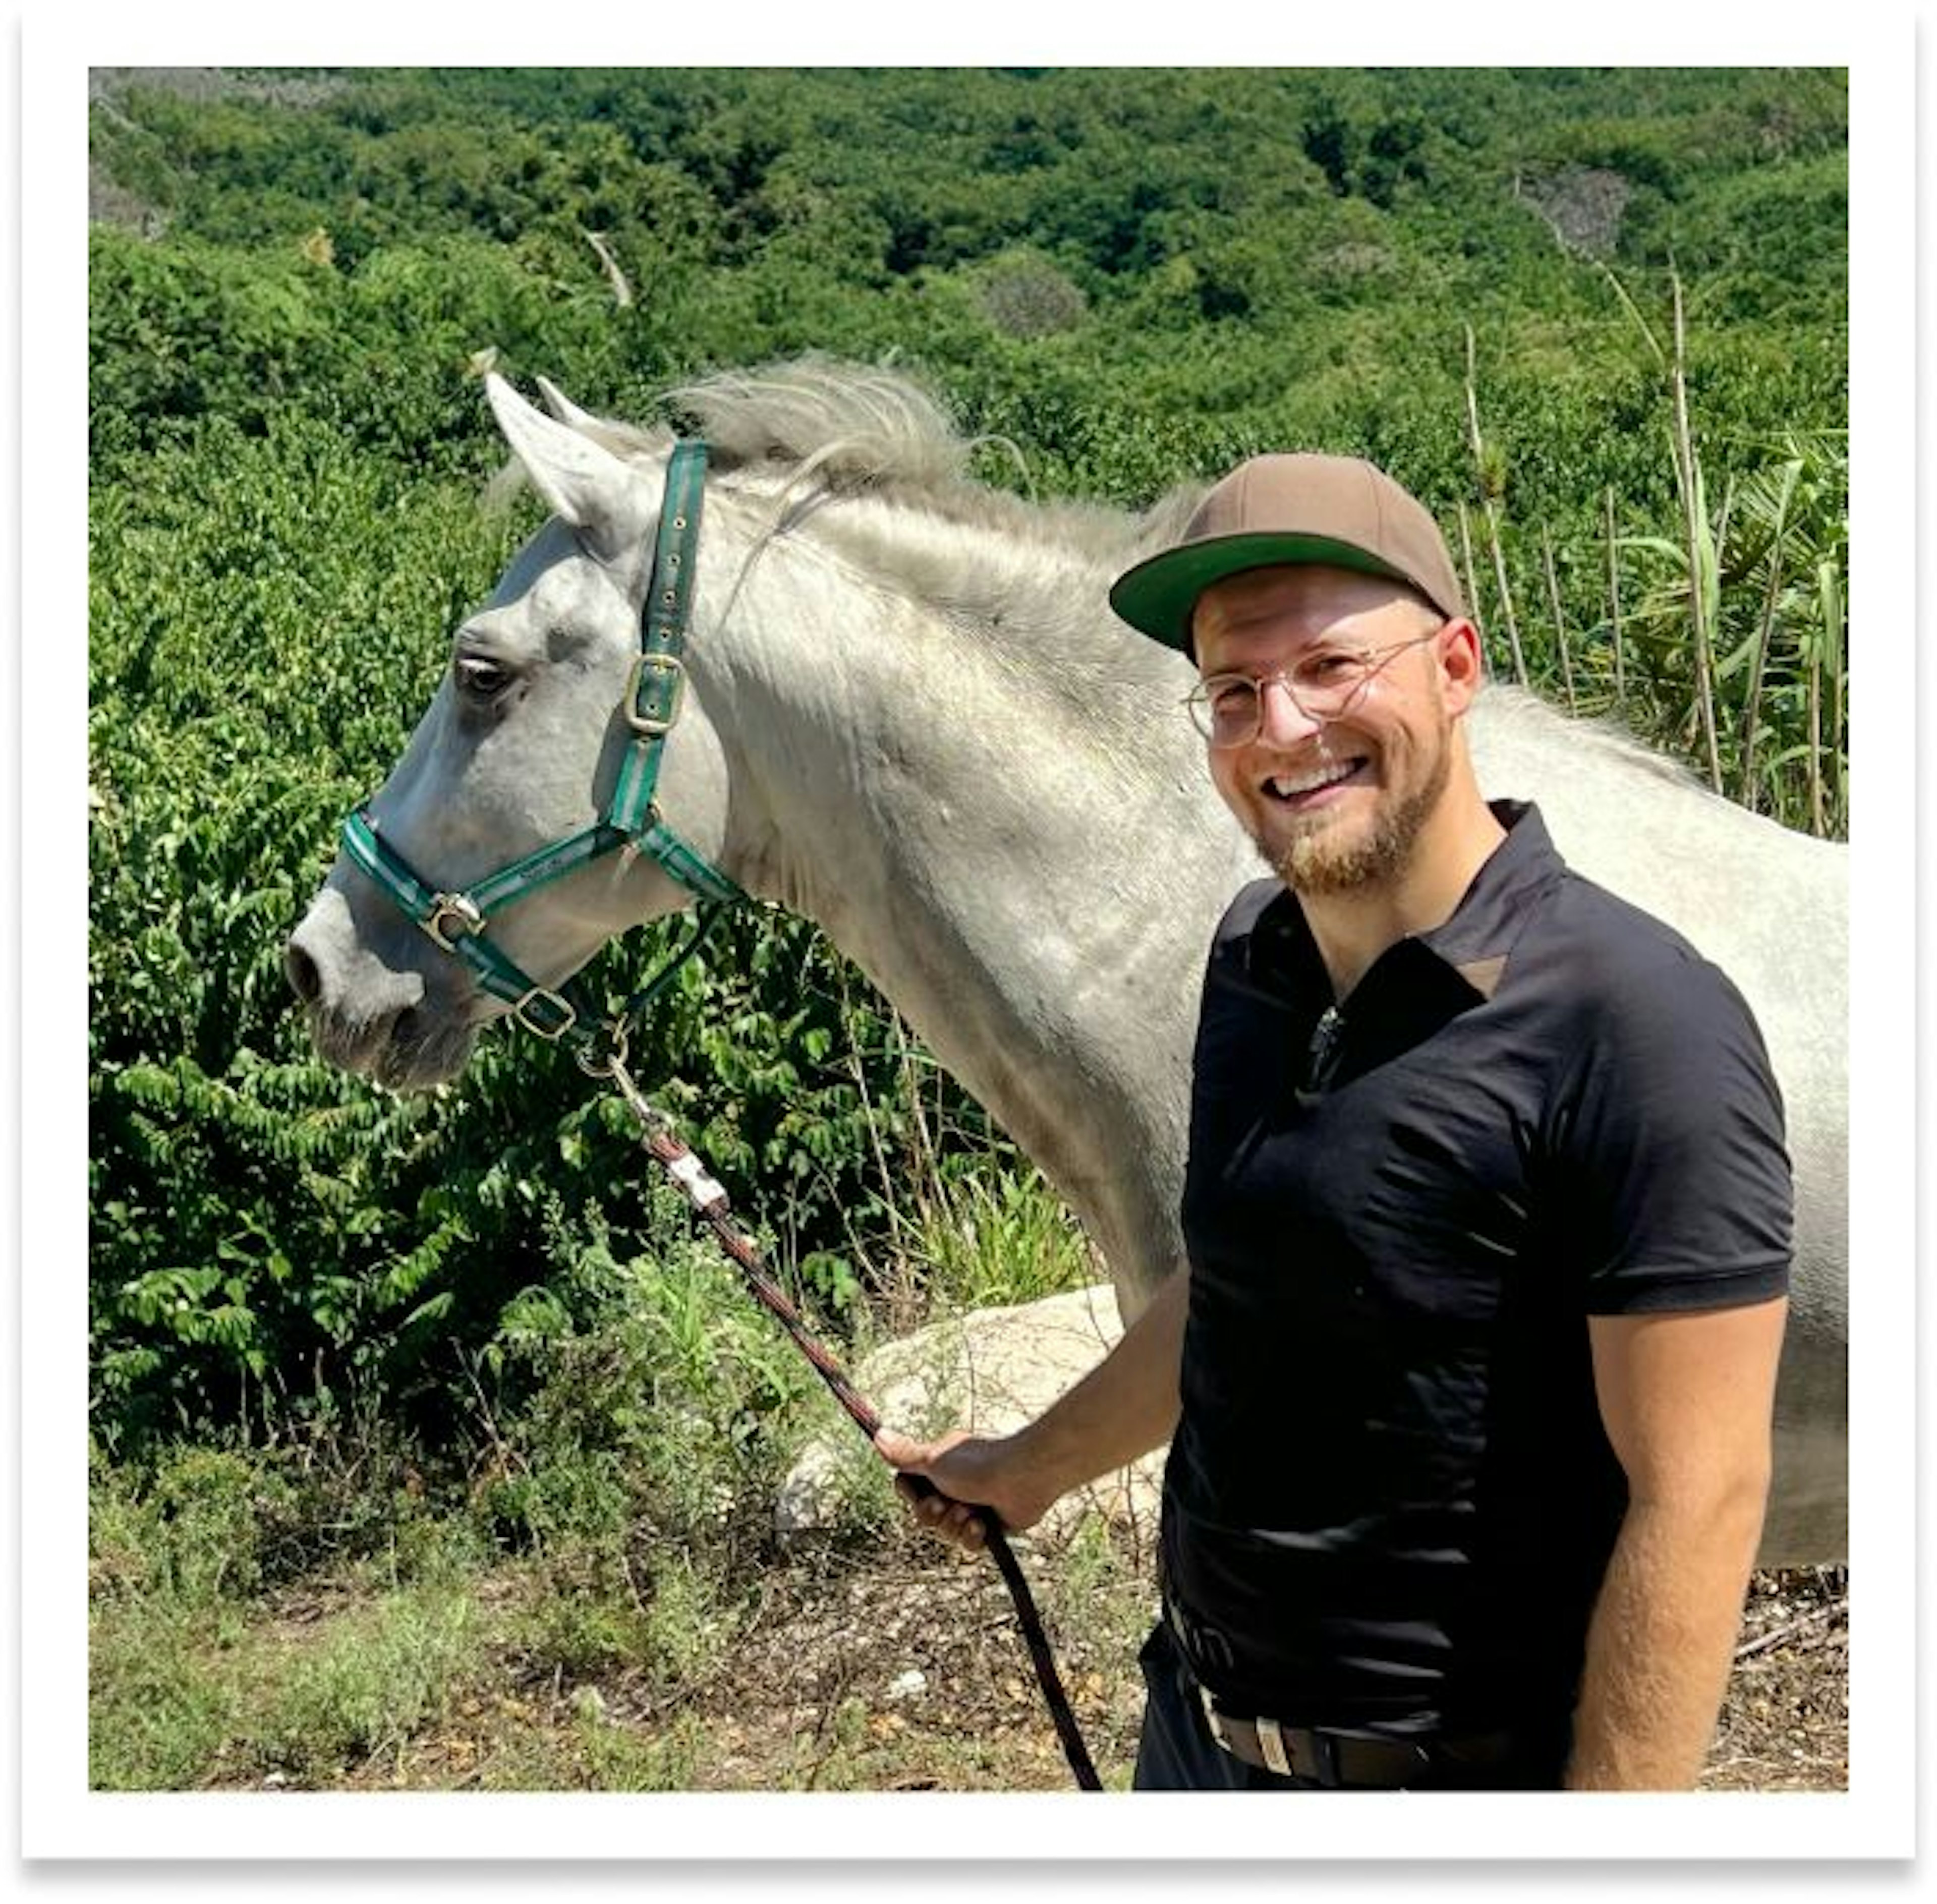 Benedikt with his horse Pegaso